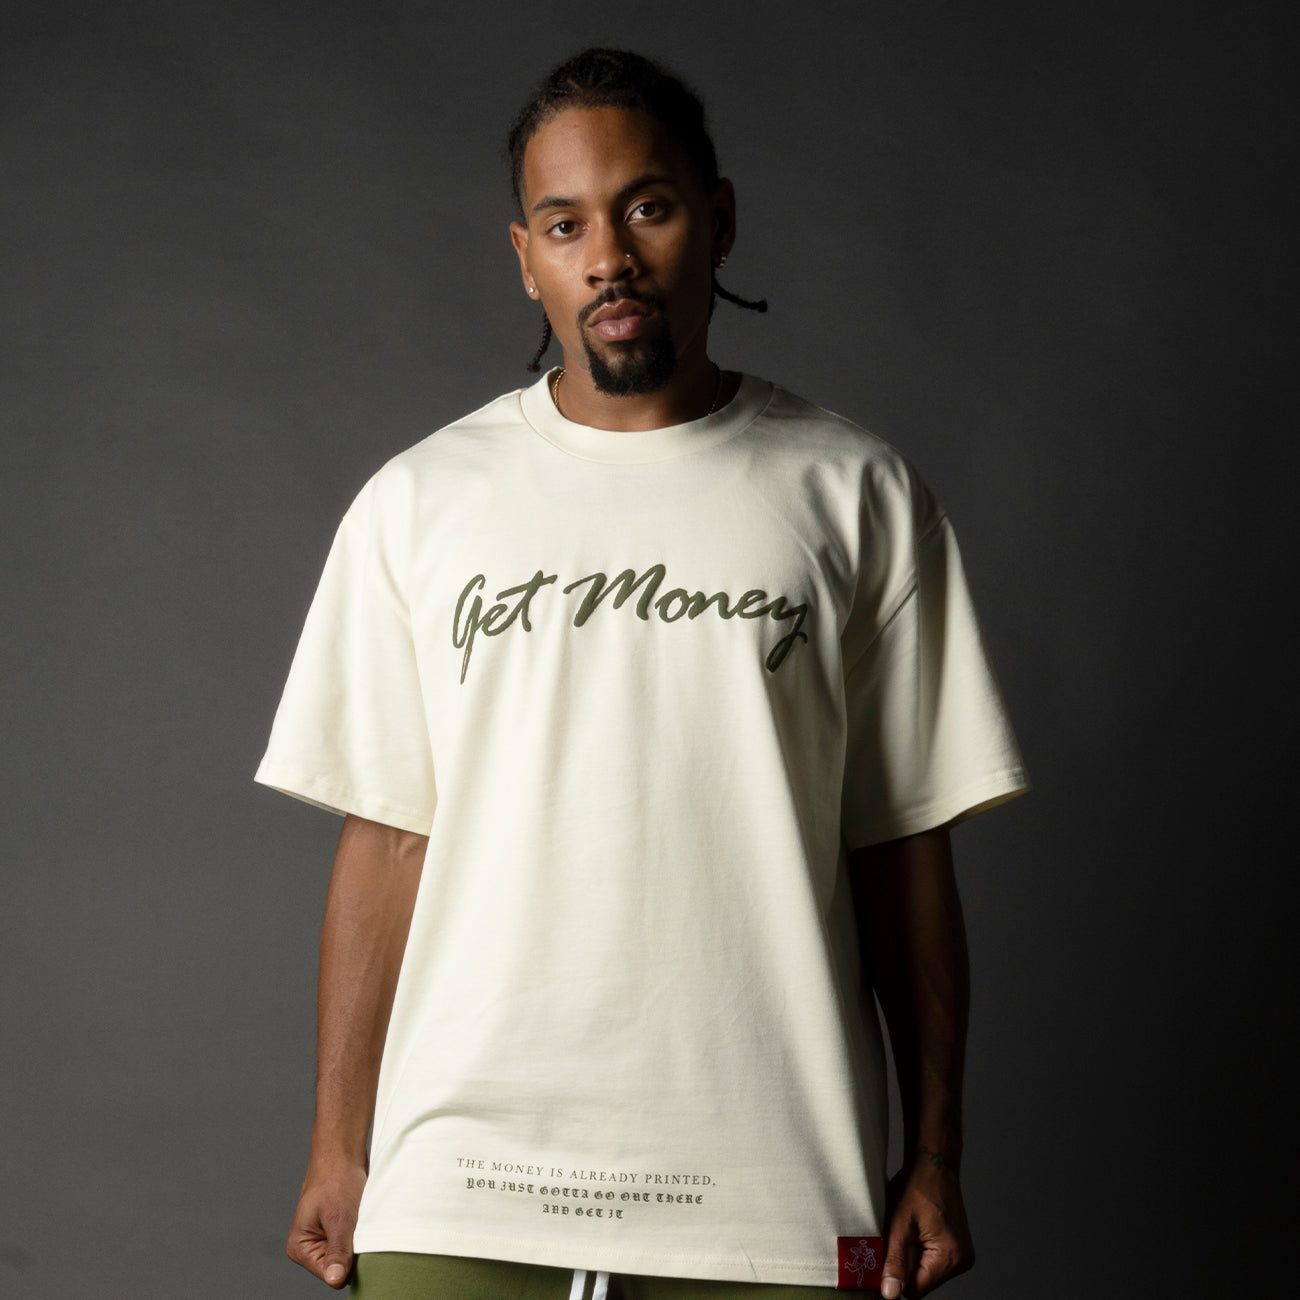 GM Money Impreso - Camiseta ULTRA HW Red Label - Mantequilla